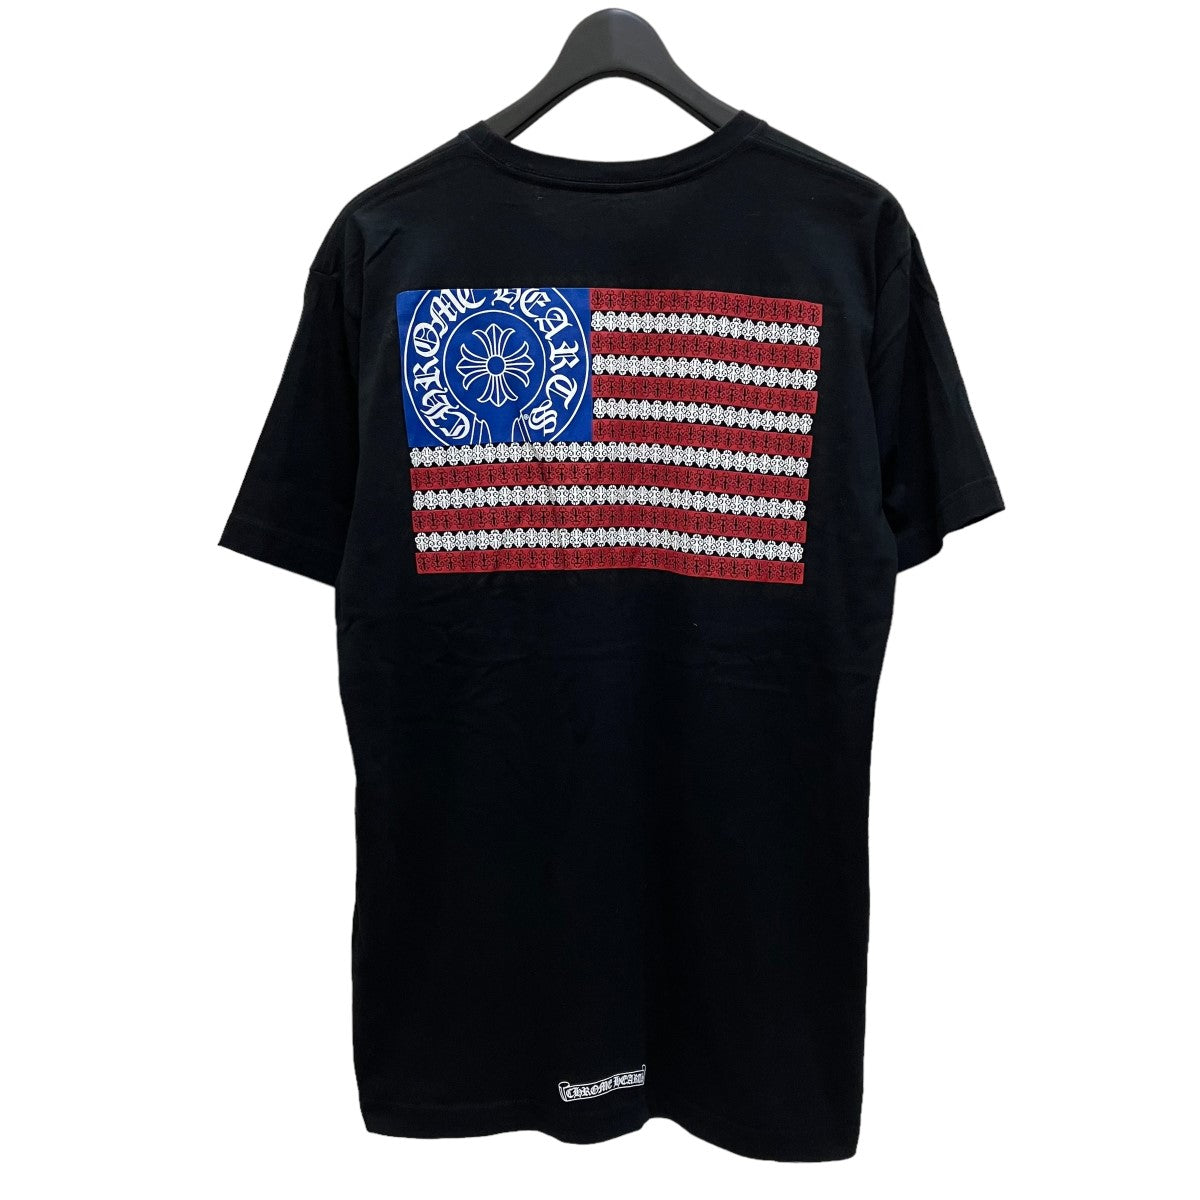 CHROME HEARTS(クロムハーツ) American flag Tee 星条旗Tシャツ ...